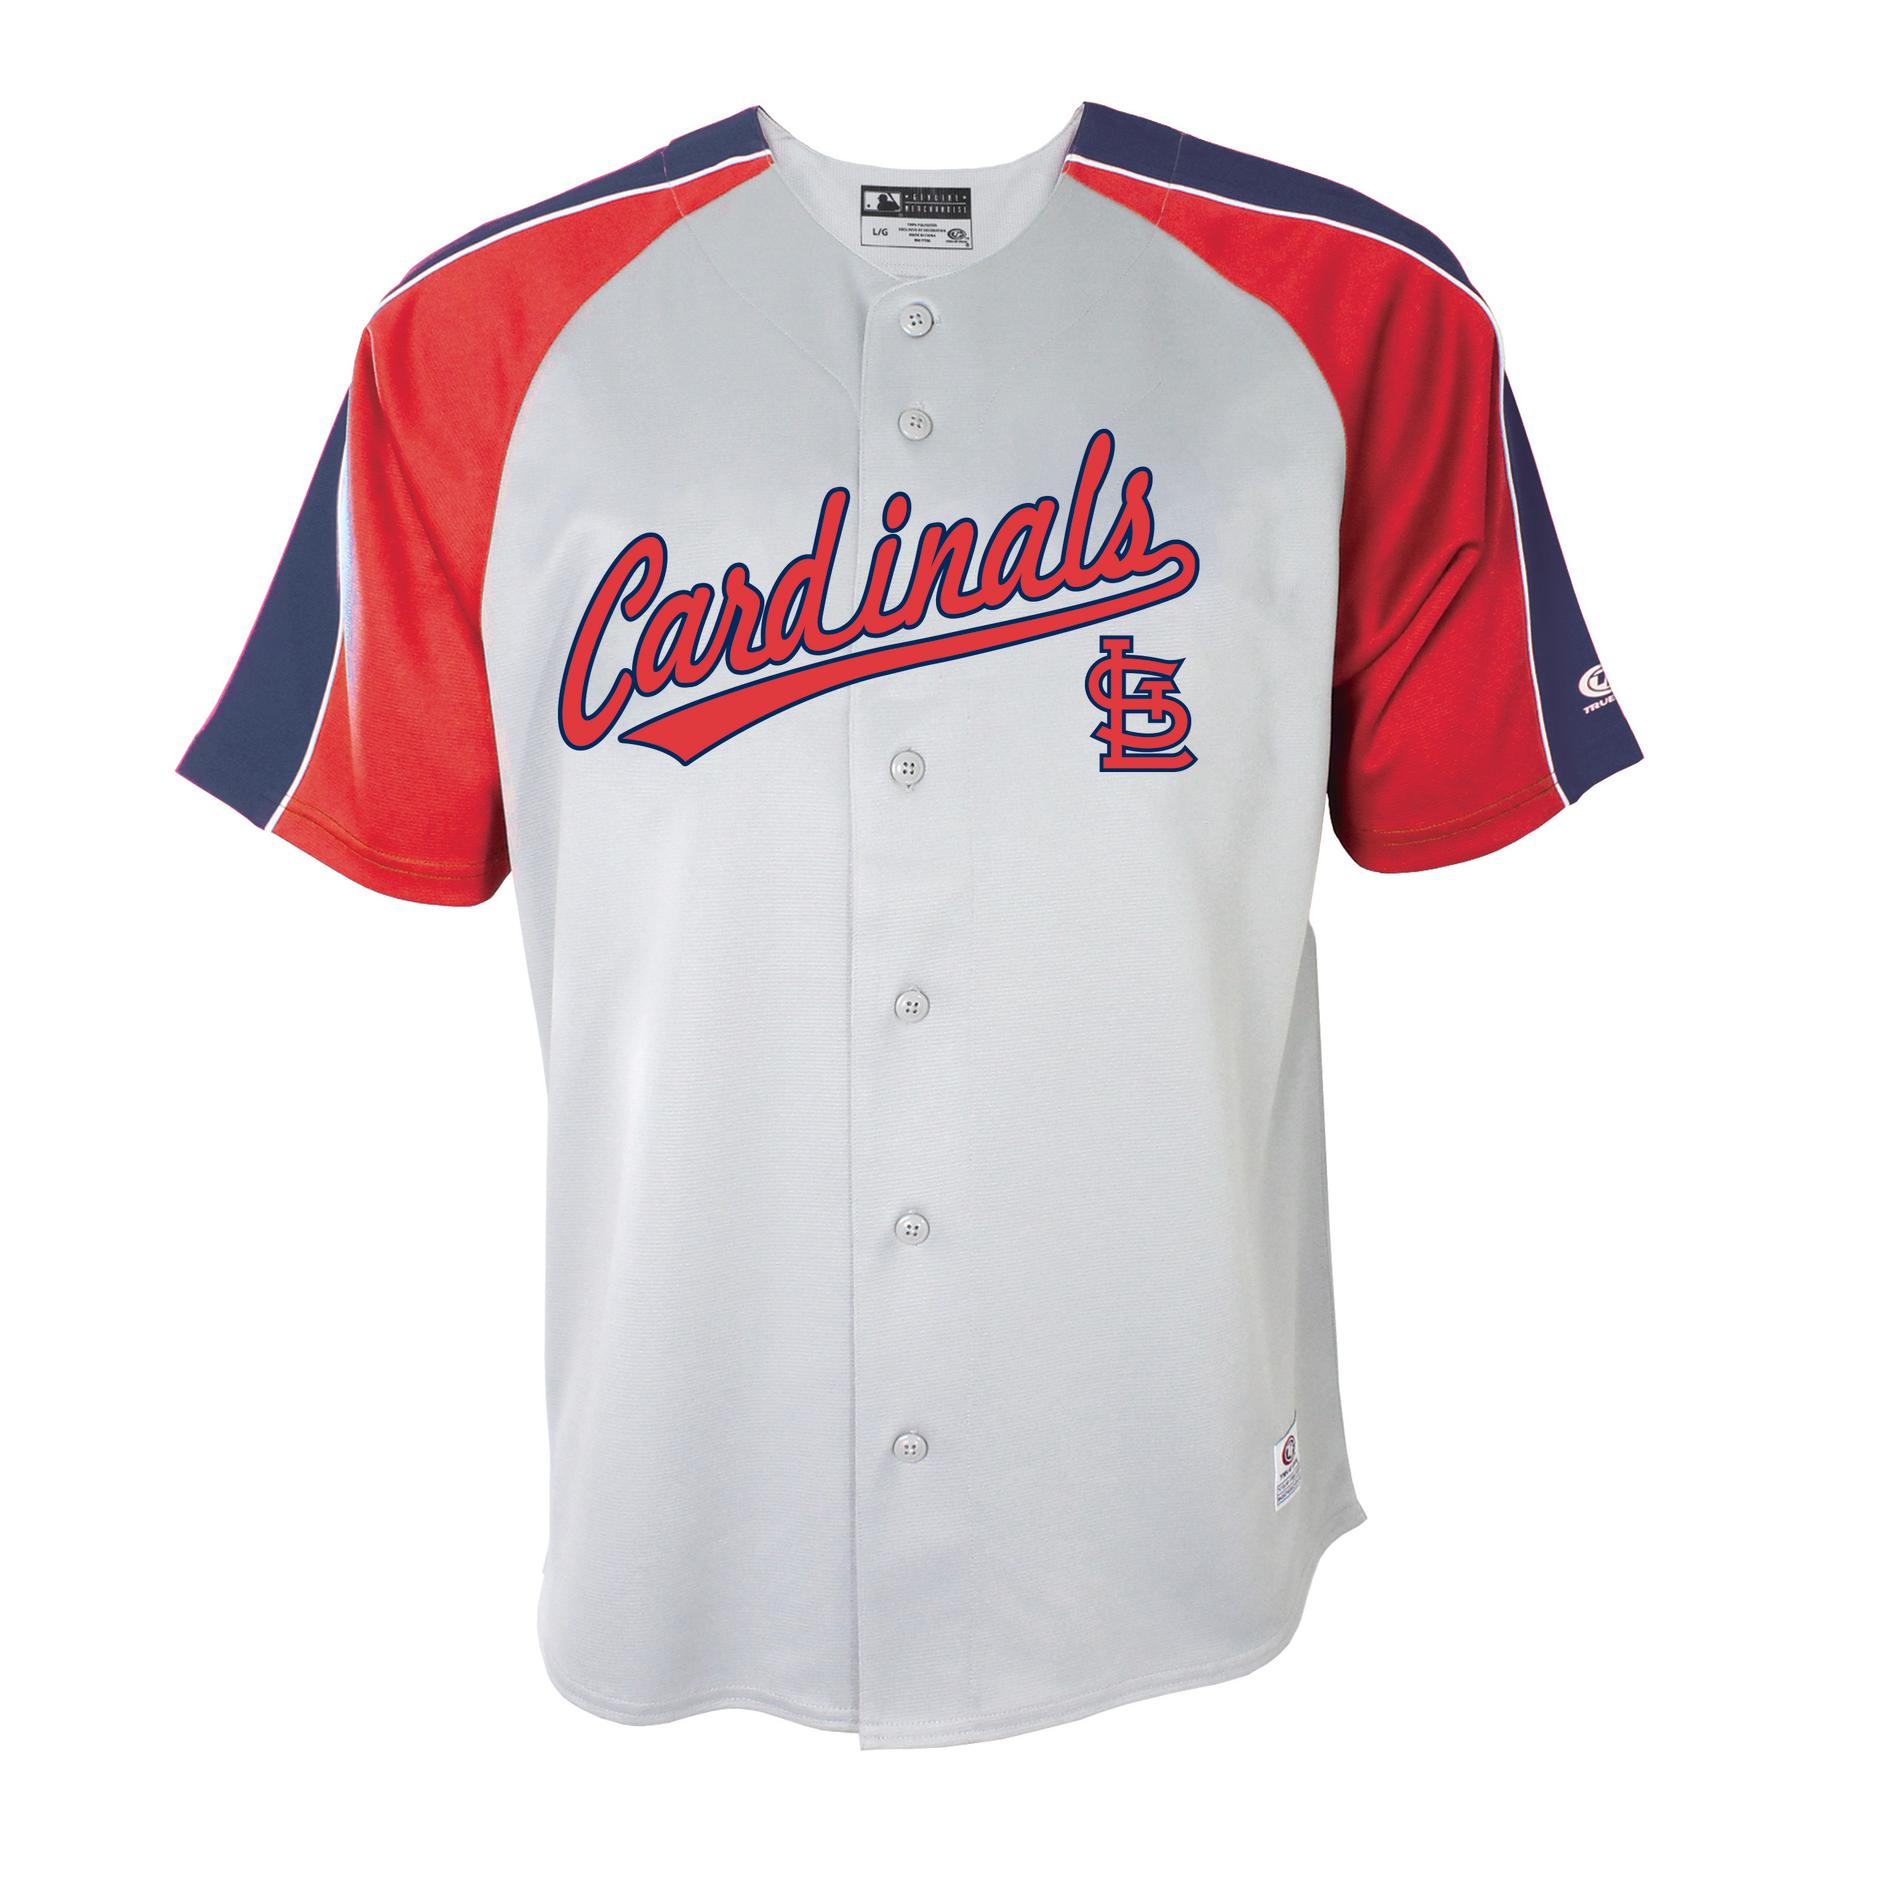 cardinals baseball jersey